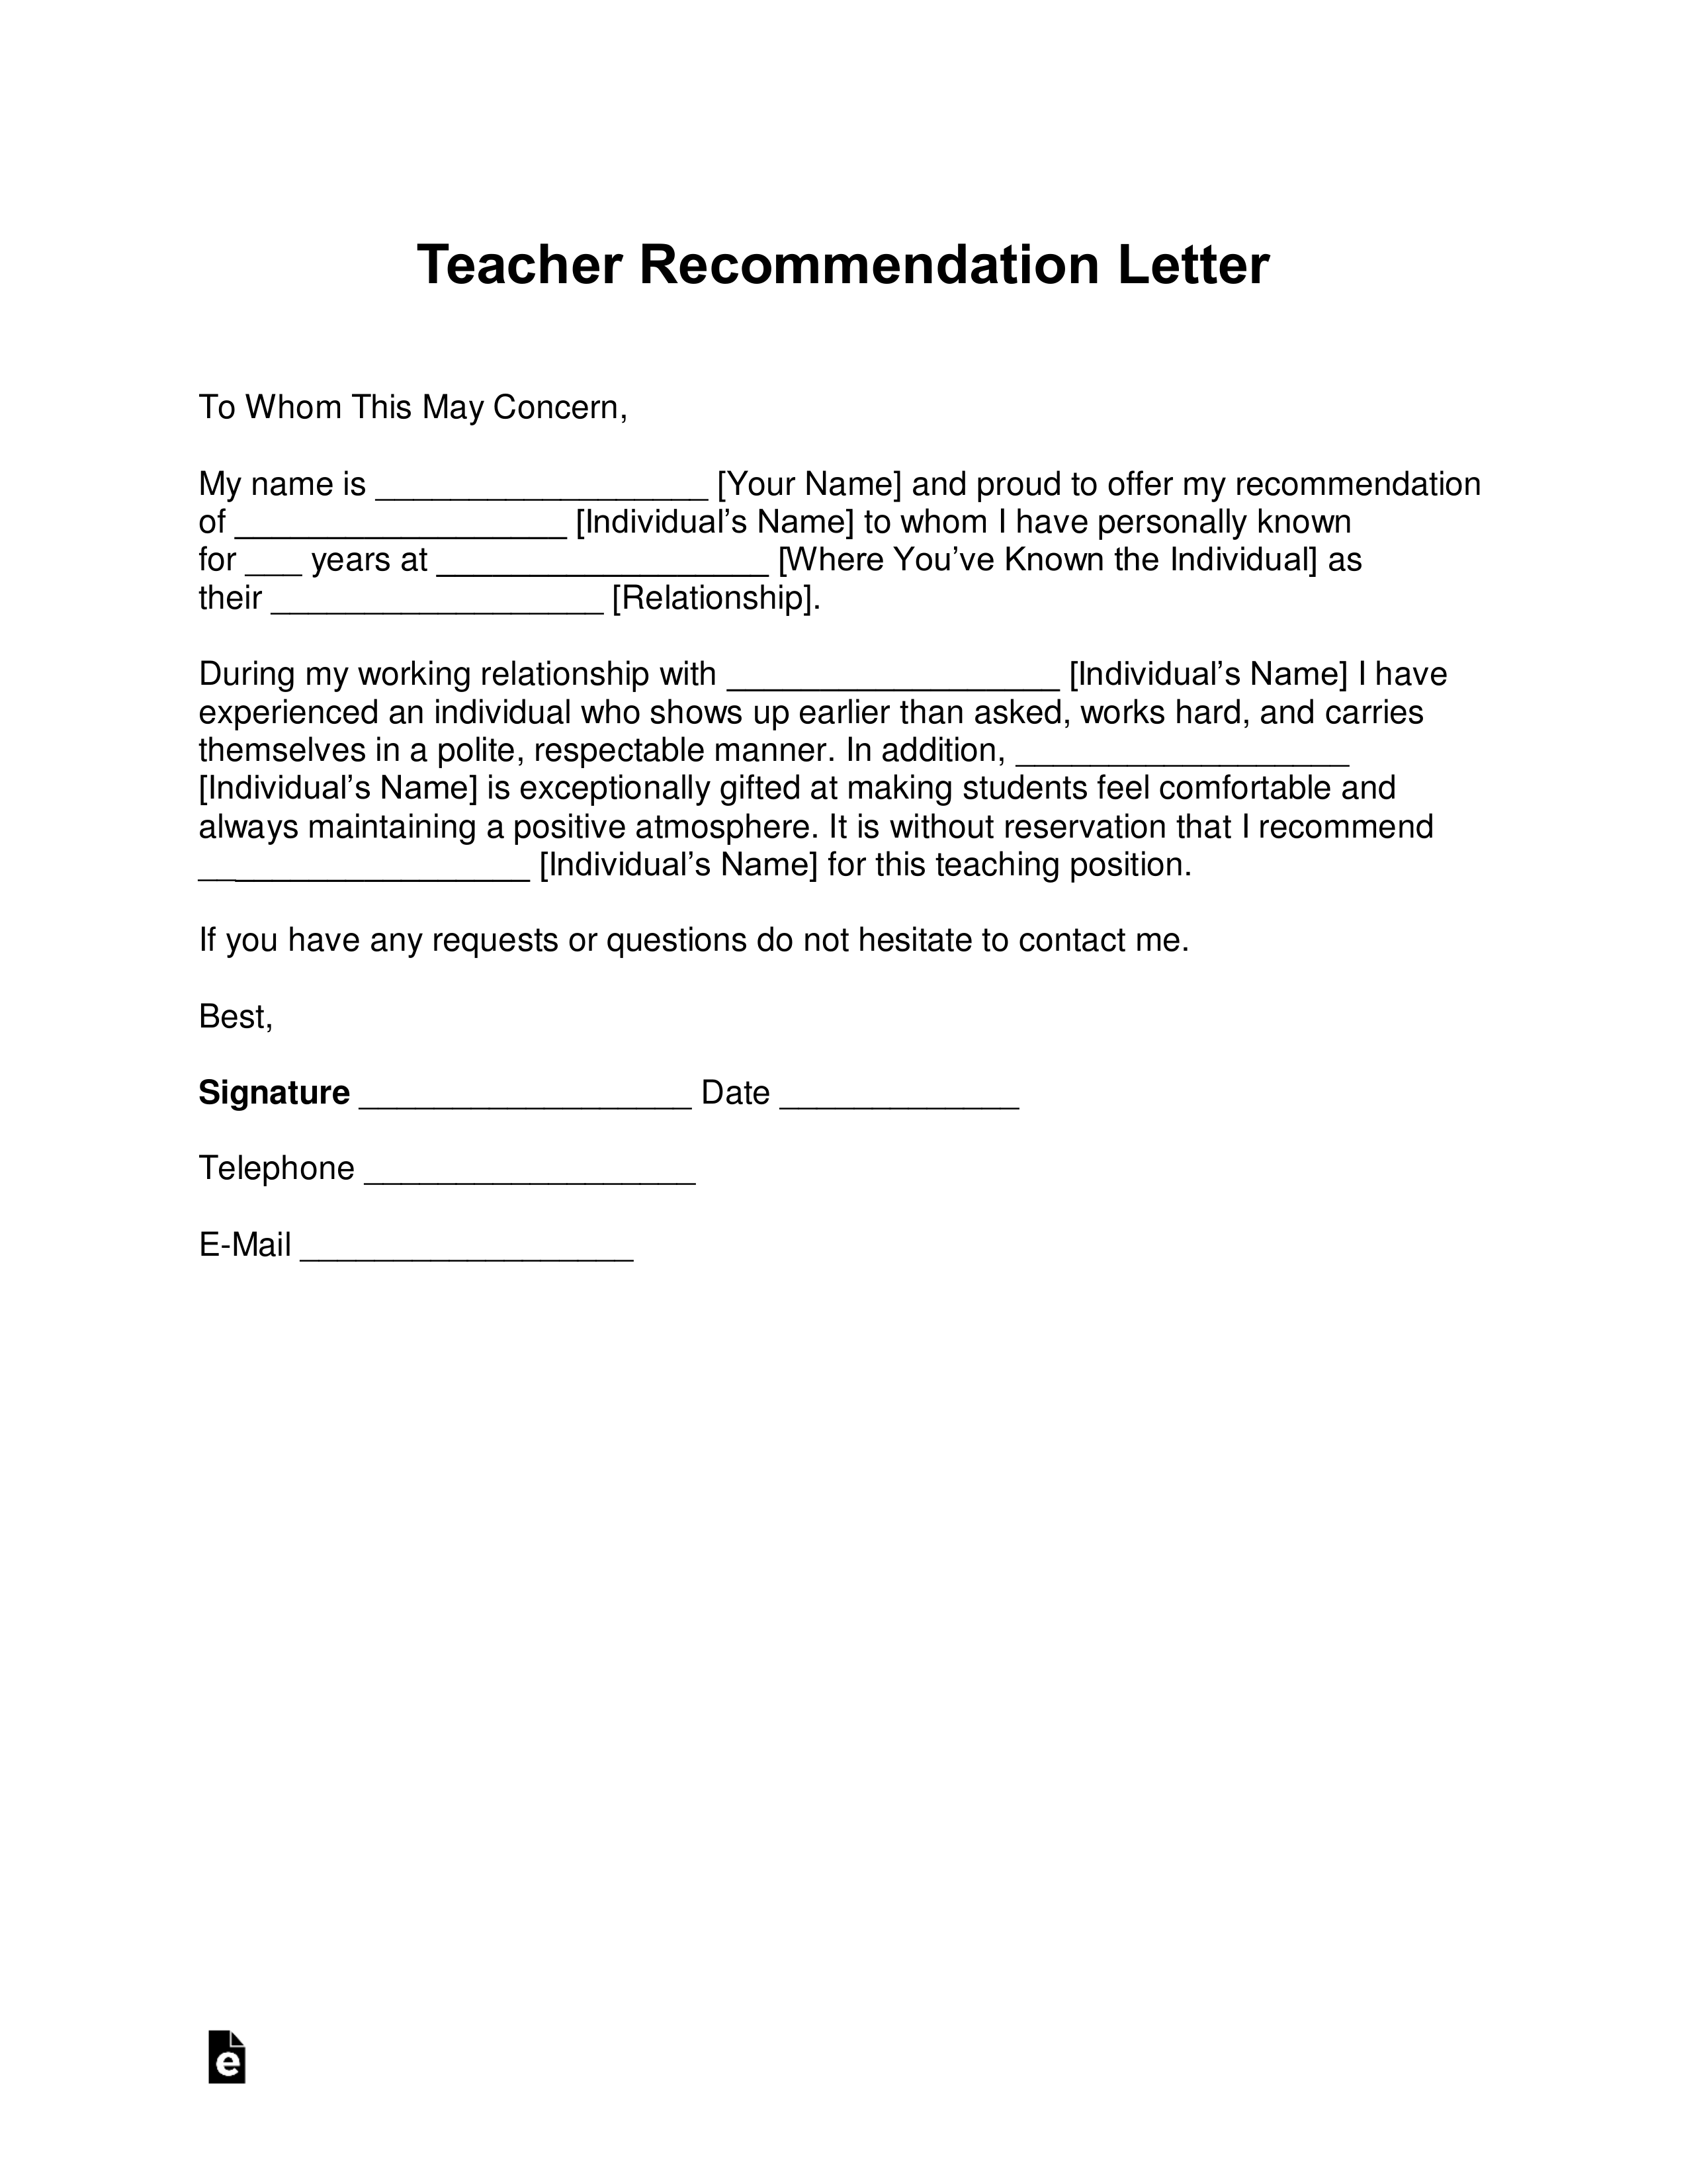 Sample Letter Of Recommendation For Elementary Teacher from eforms.com